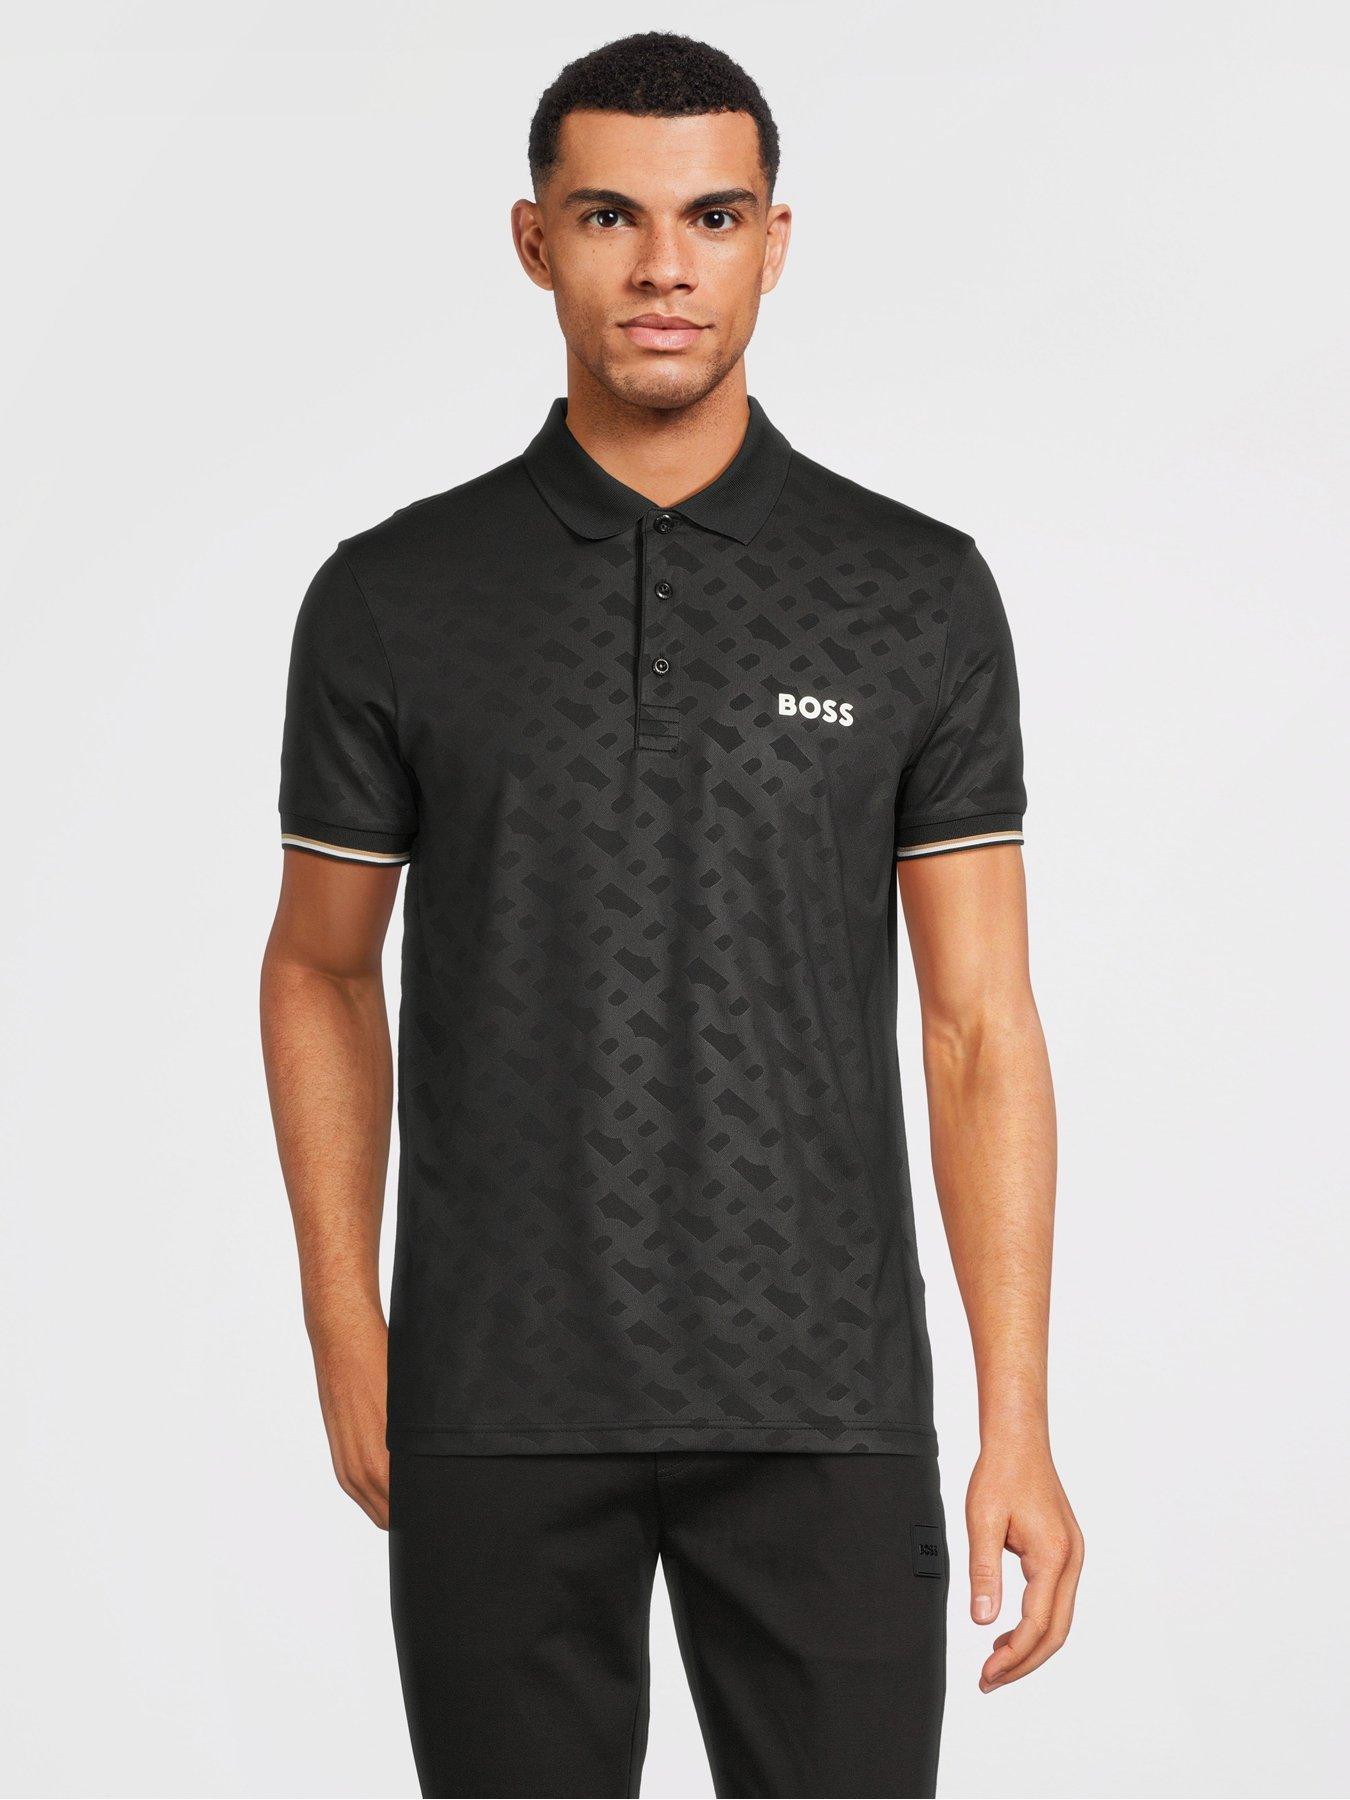 BOSS Patteo Mb 12 Slim Fit Polo Shirt - Black | very.co.uk